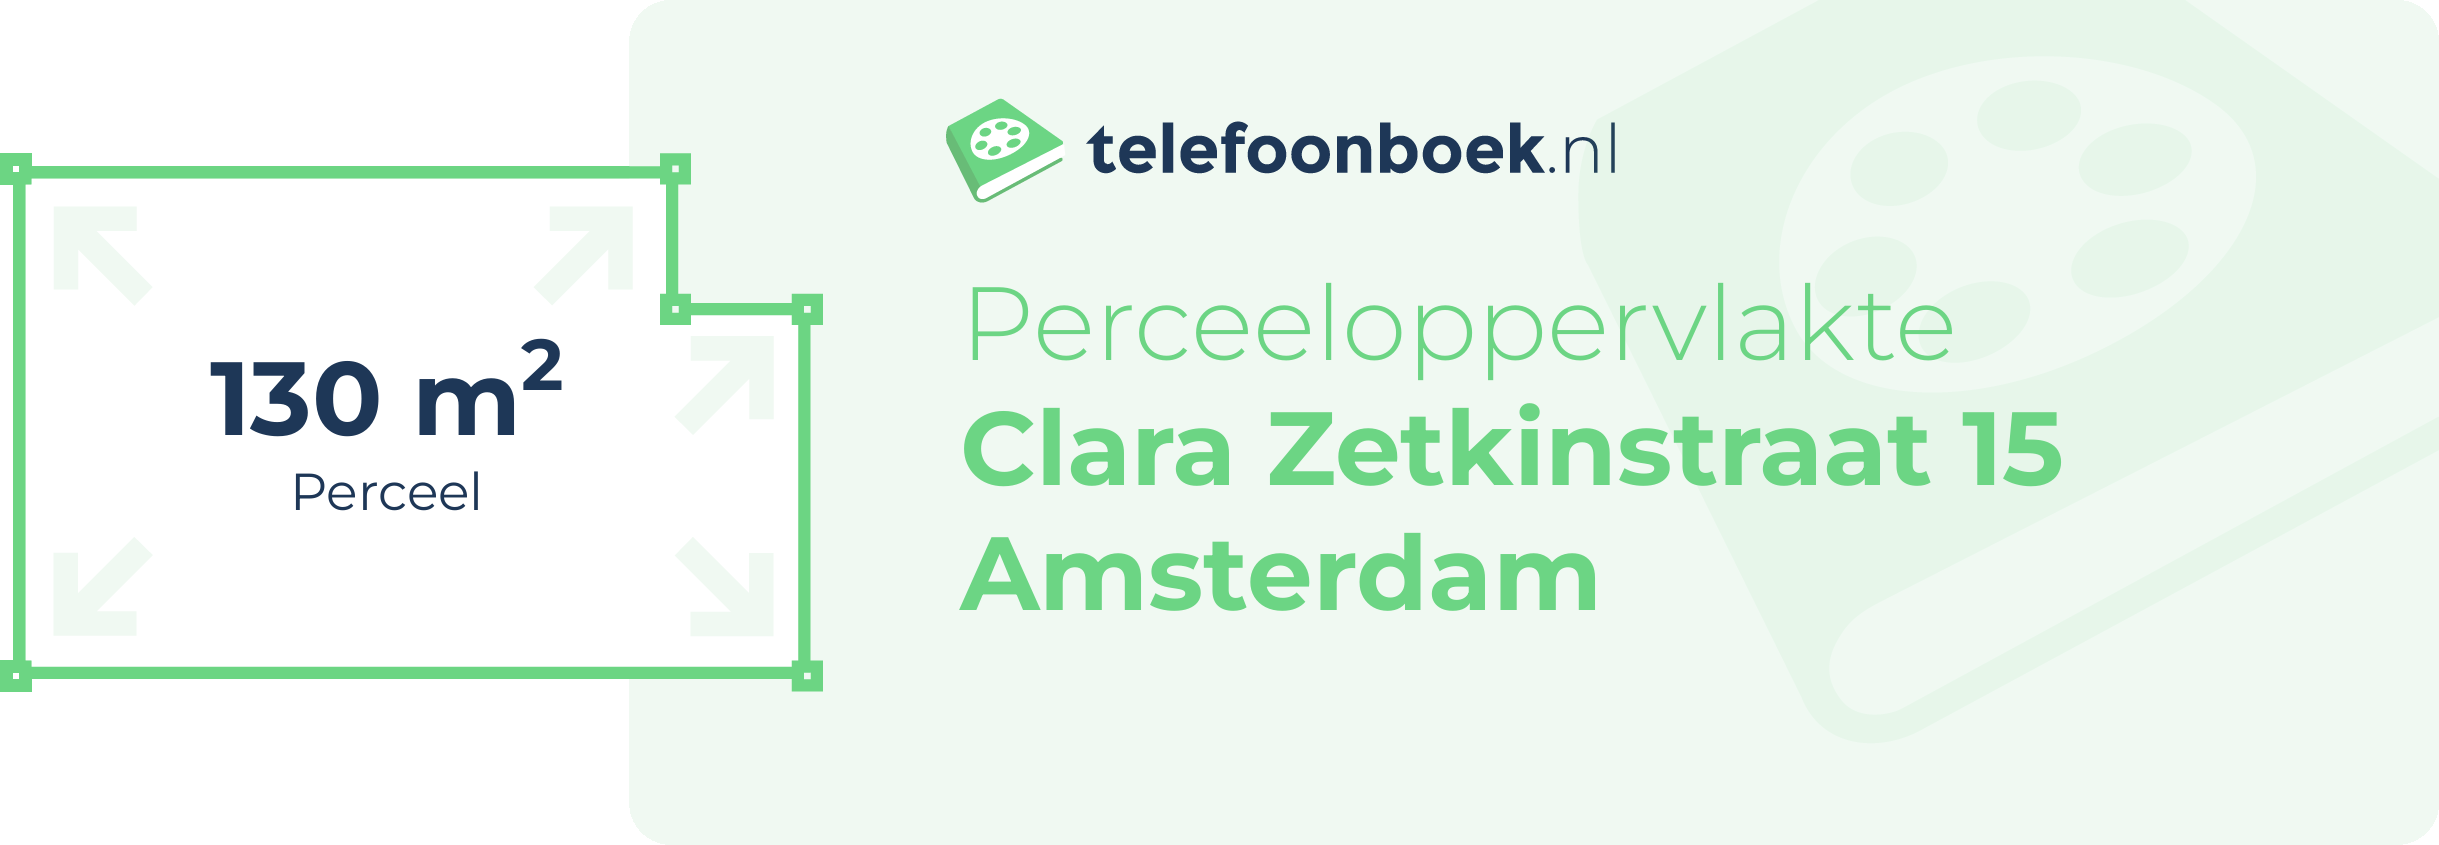 Perceeloppervlakte Clara Zetkinstraat 15 Amsterdam